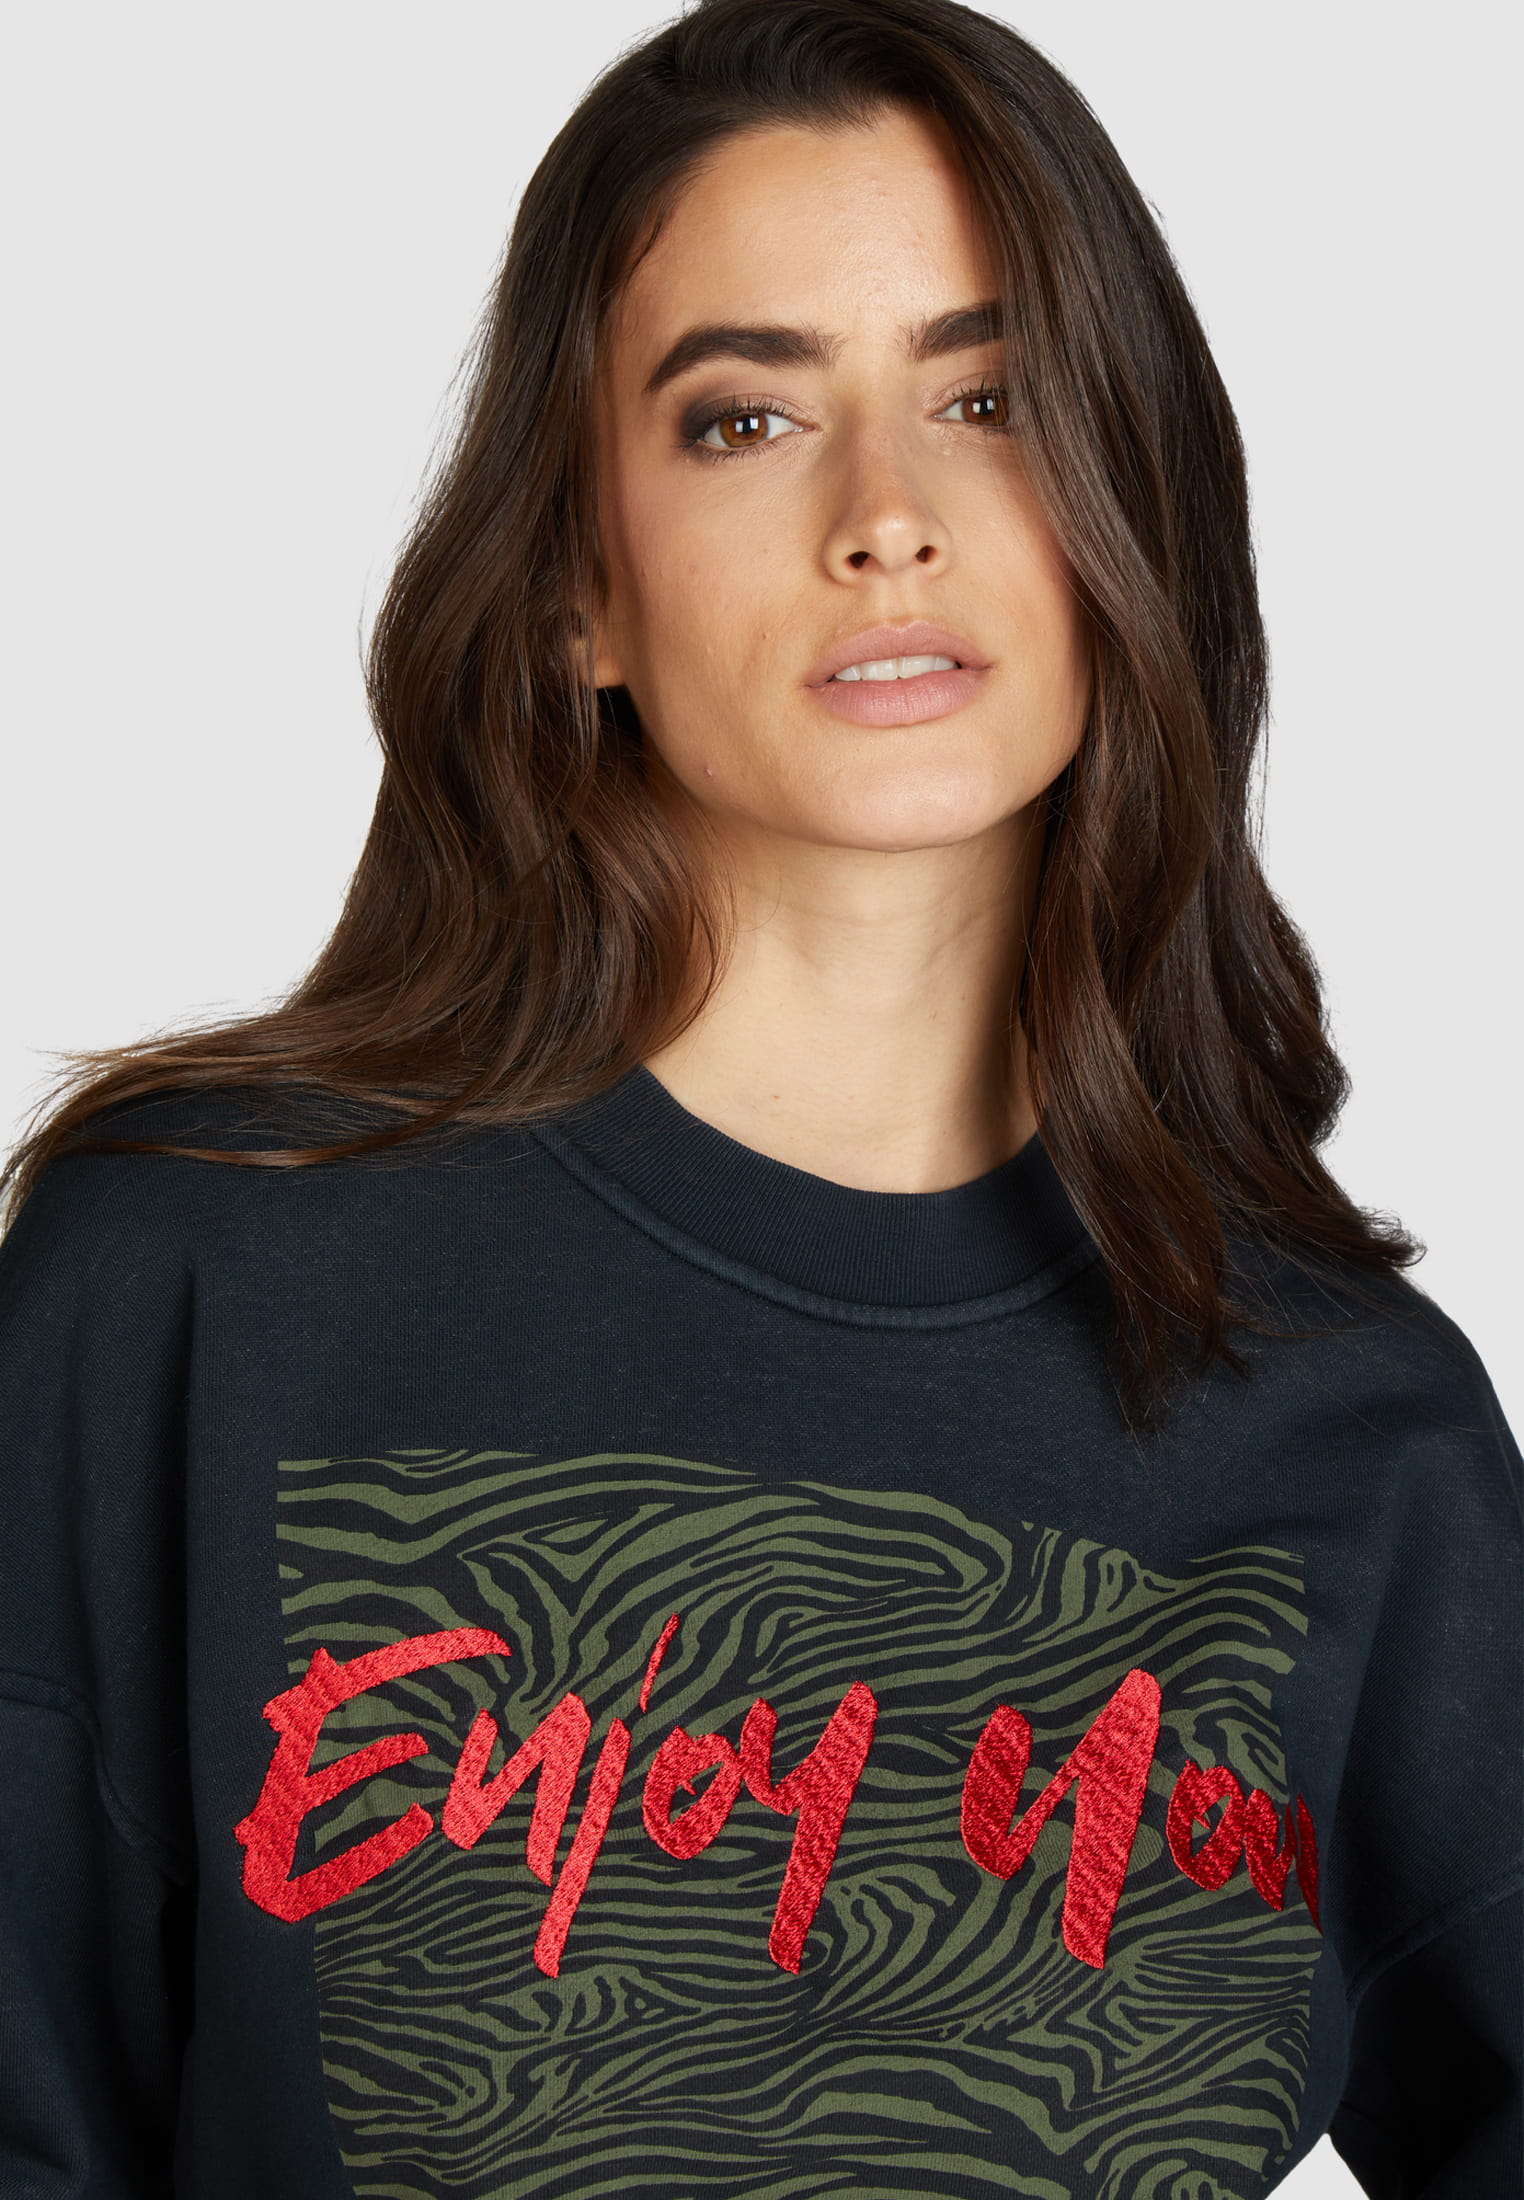 Sweatshirt Enjoy Now | Shirts | Fashion